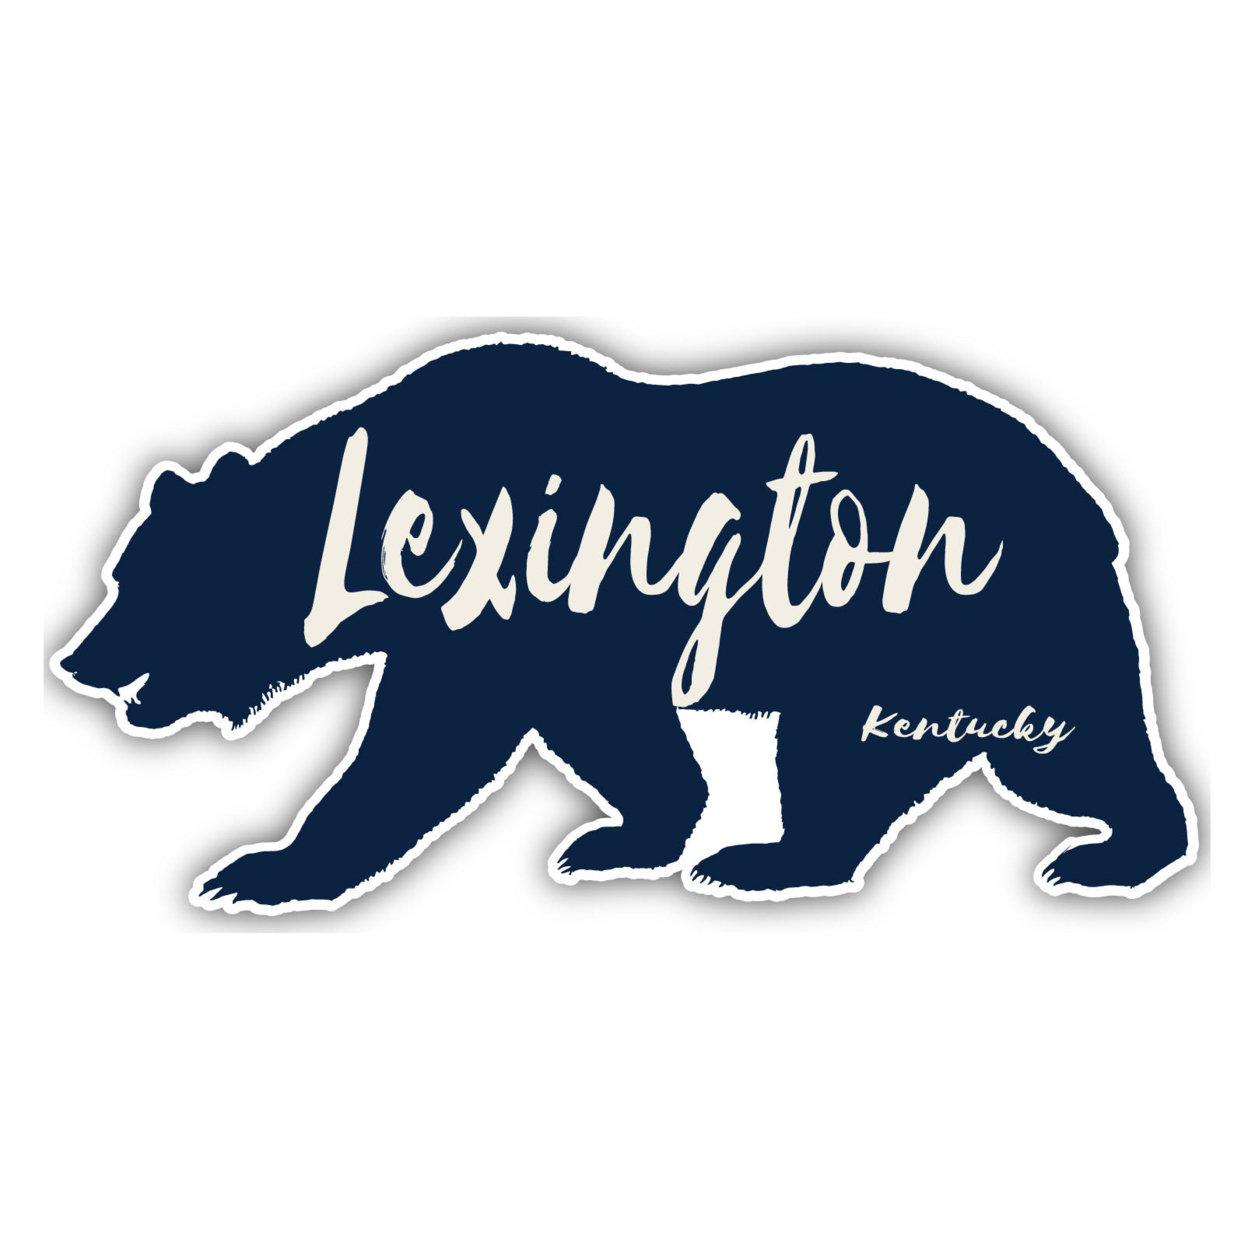 Lexington Kentucky Souvenir Decorative Stickers (Choose Theme And Size) - 4-Inch, Tent